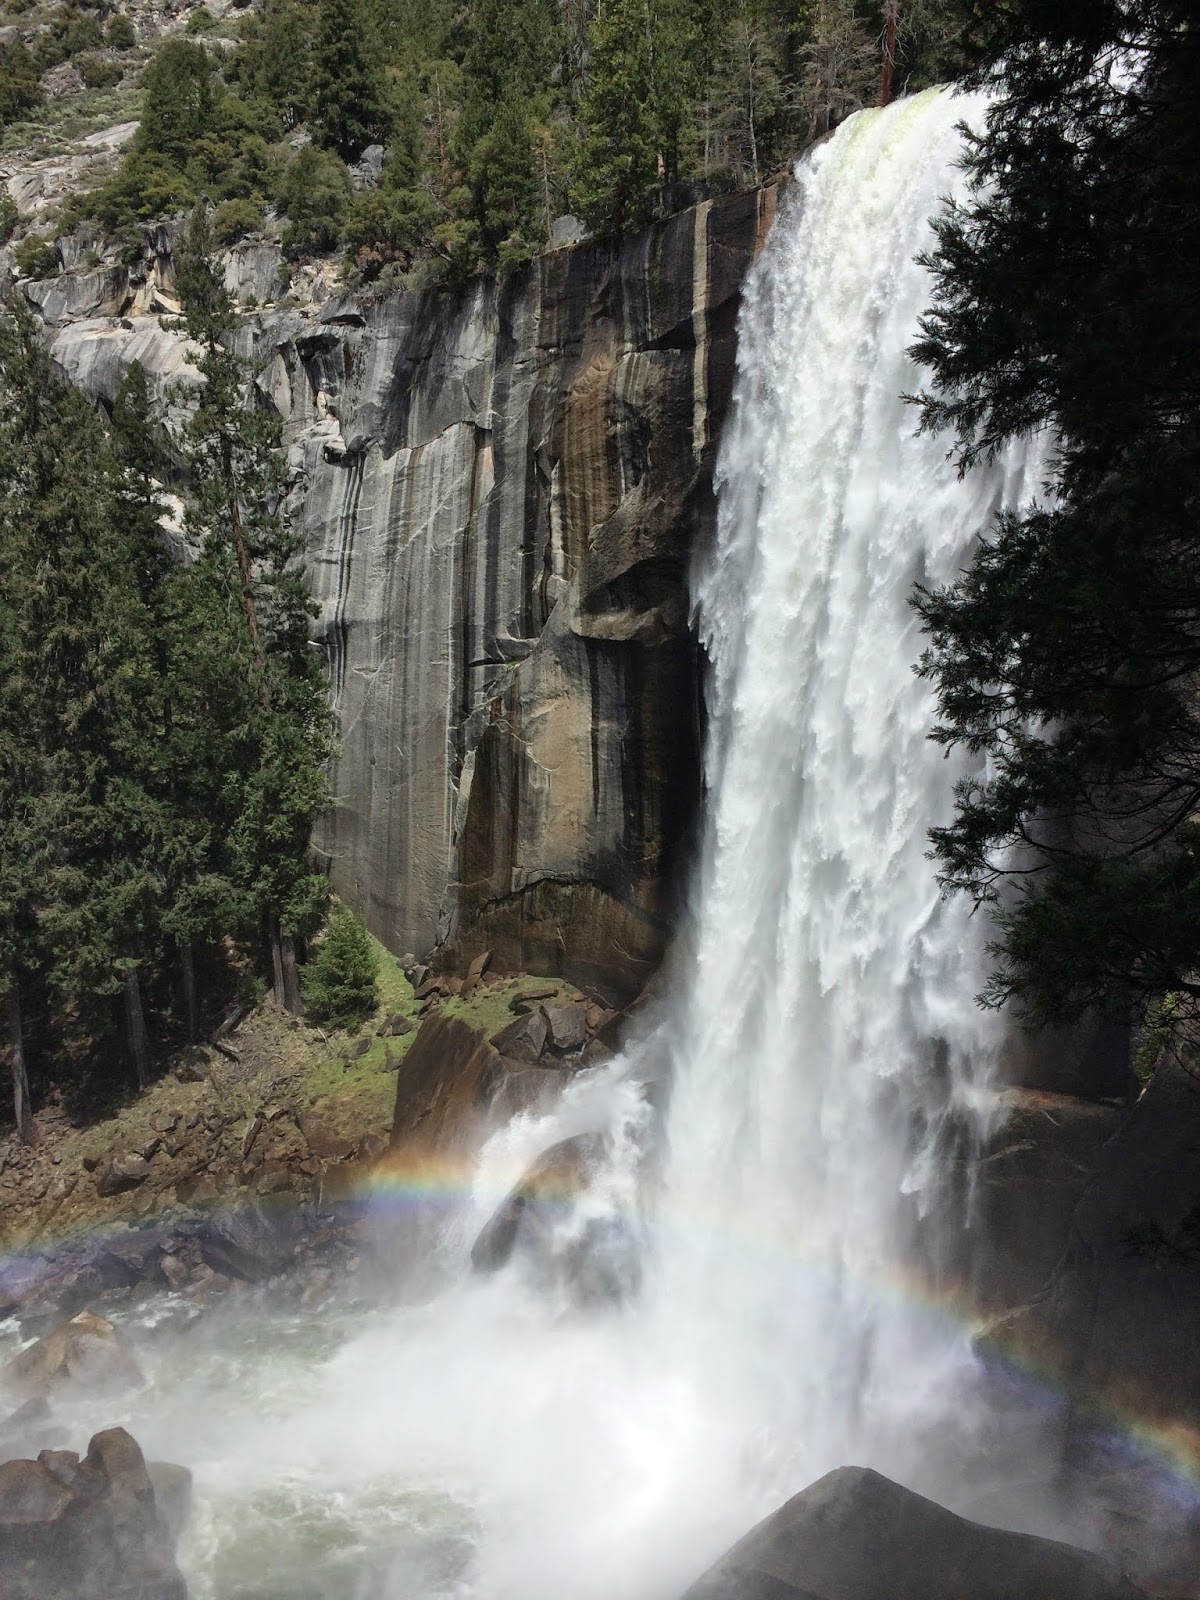 Outdoorsy Mama: Yosemite Waterfalls – Hiking to Top of Vernal Falls in